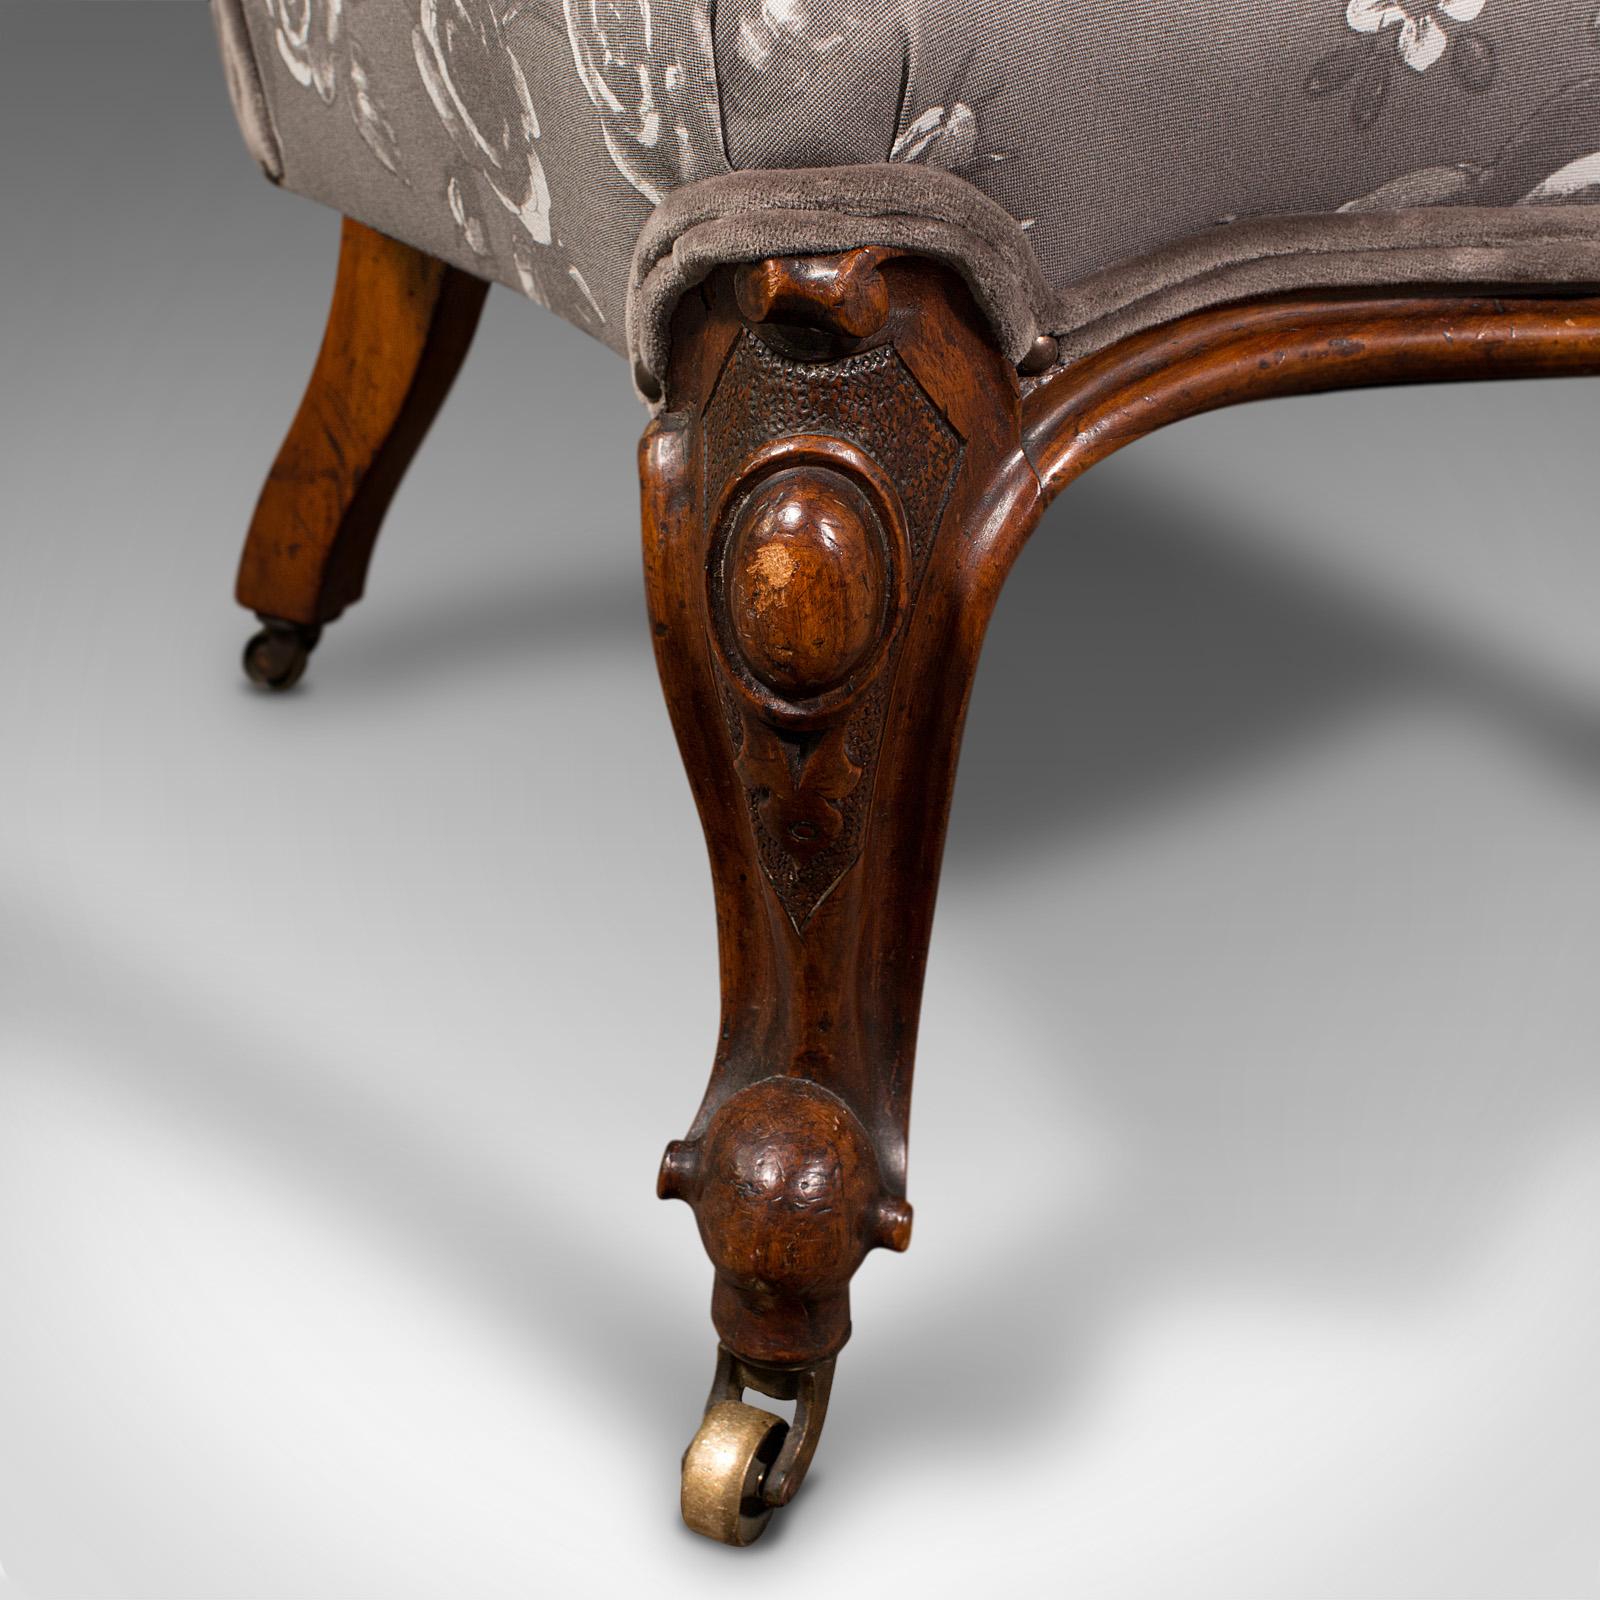 Antique Button Back Salon Chair English Walnut Spoon Seat Victorian circa 1840 For Sale 5